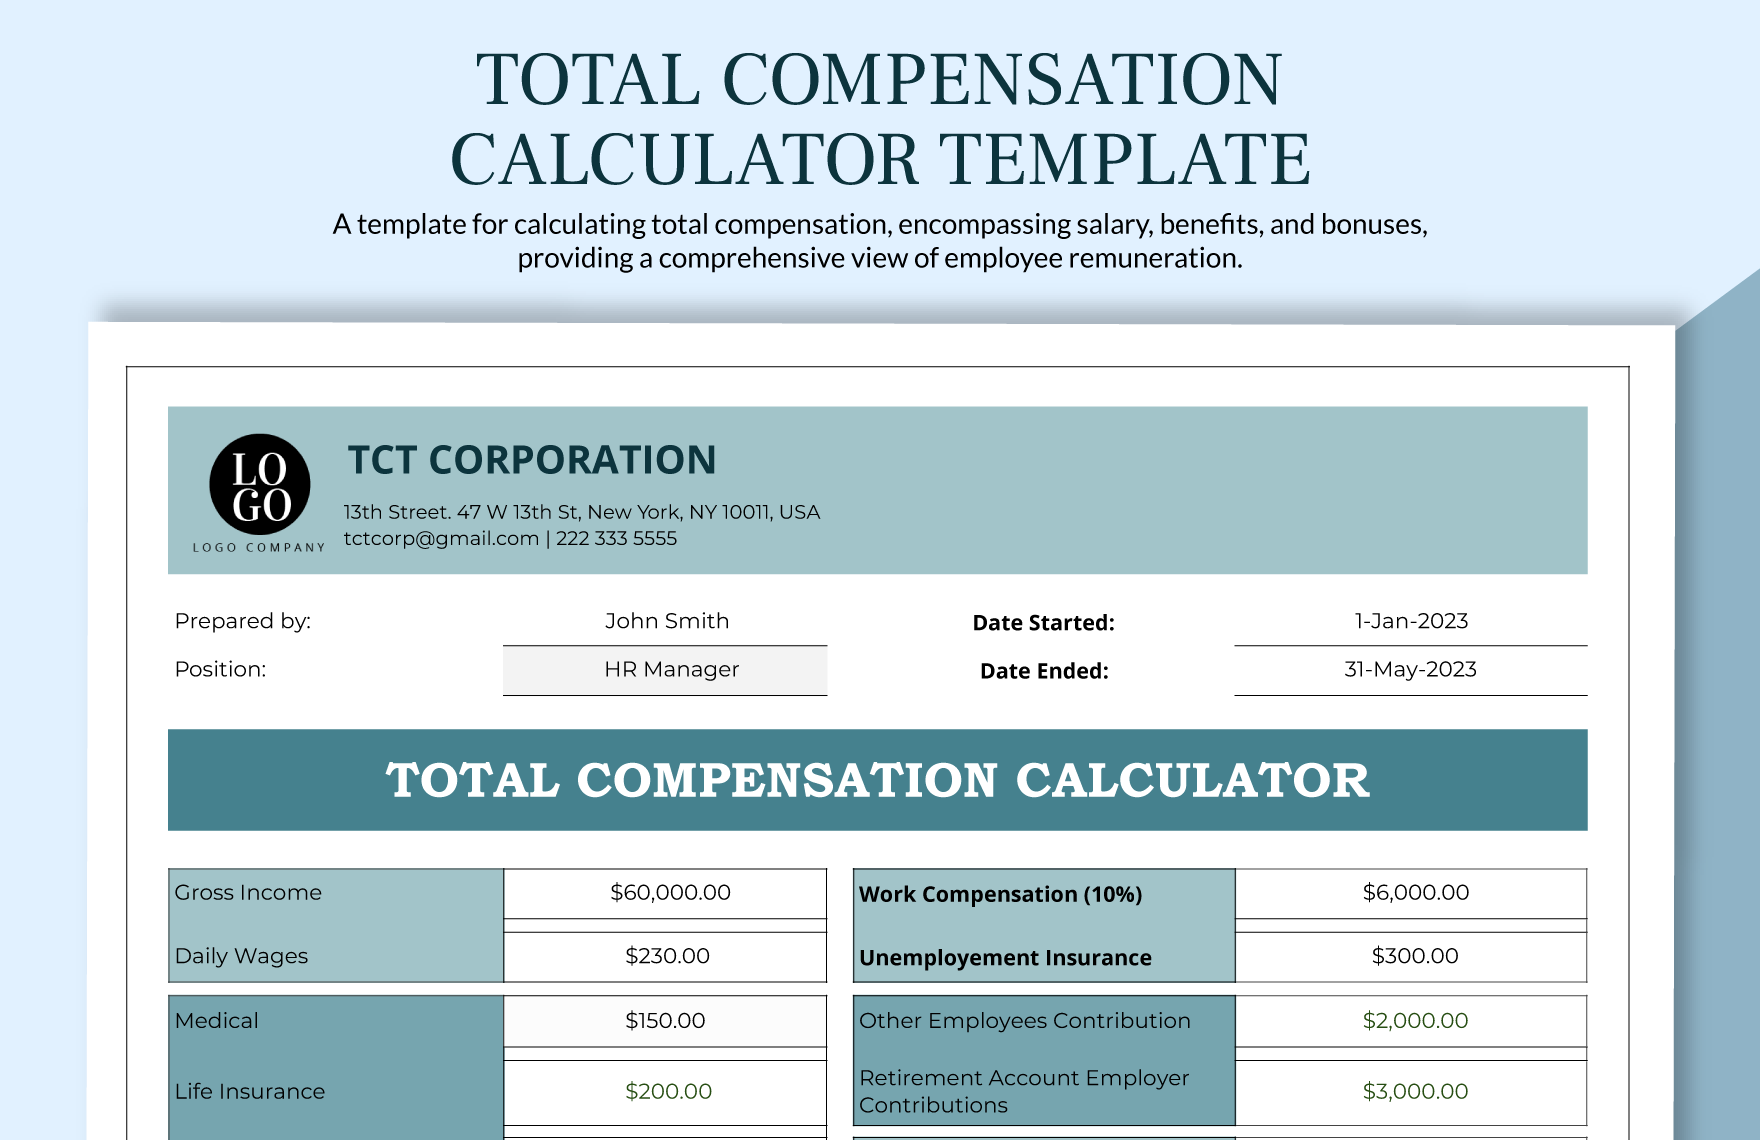 Total Compensation Calculator Template 1nbju 